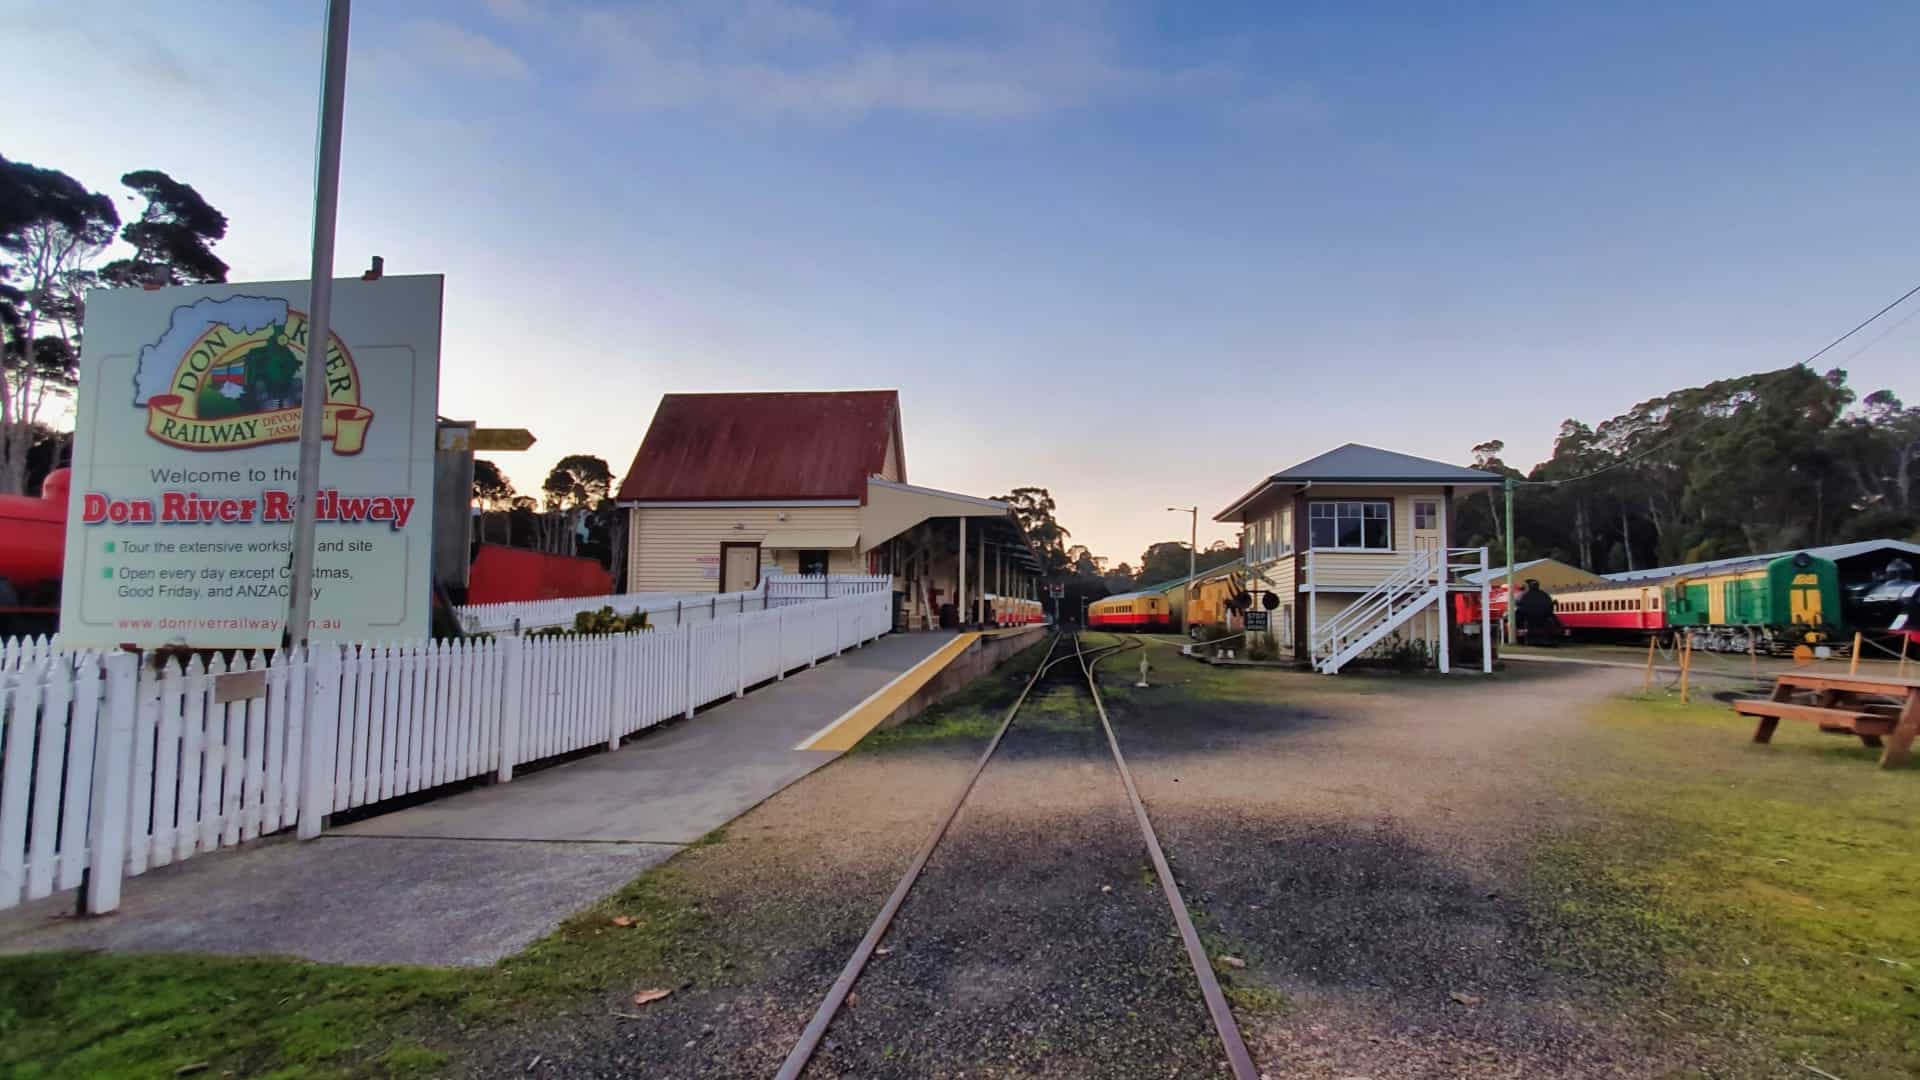 Historic Don River Railway station in Tasmania.